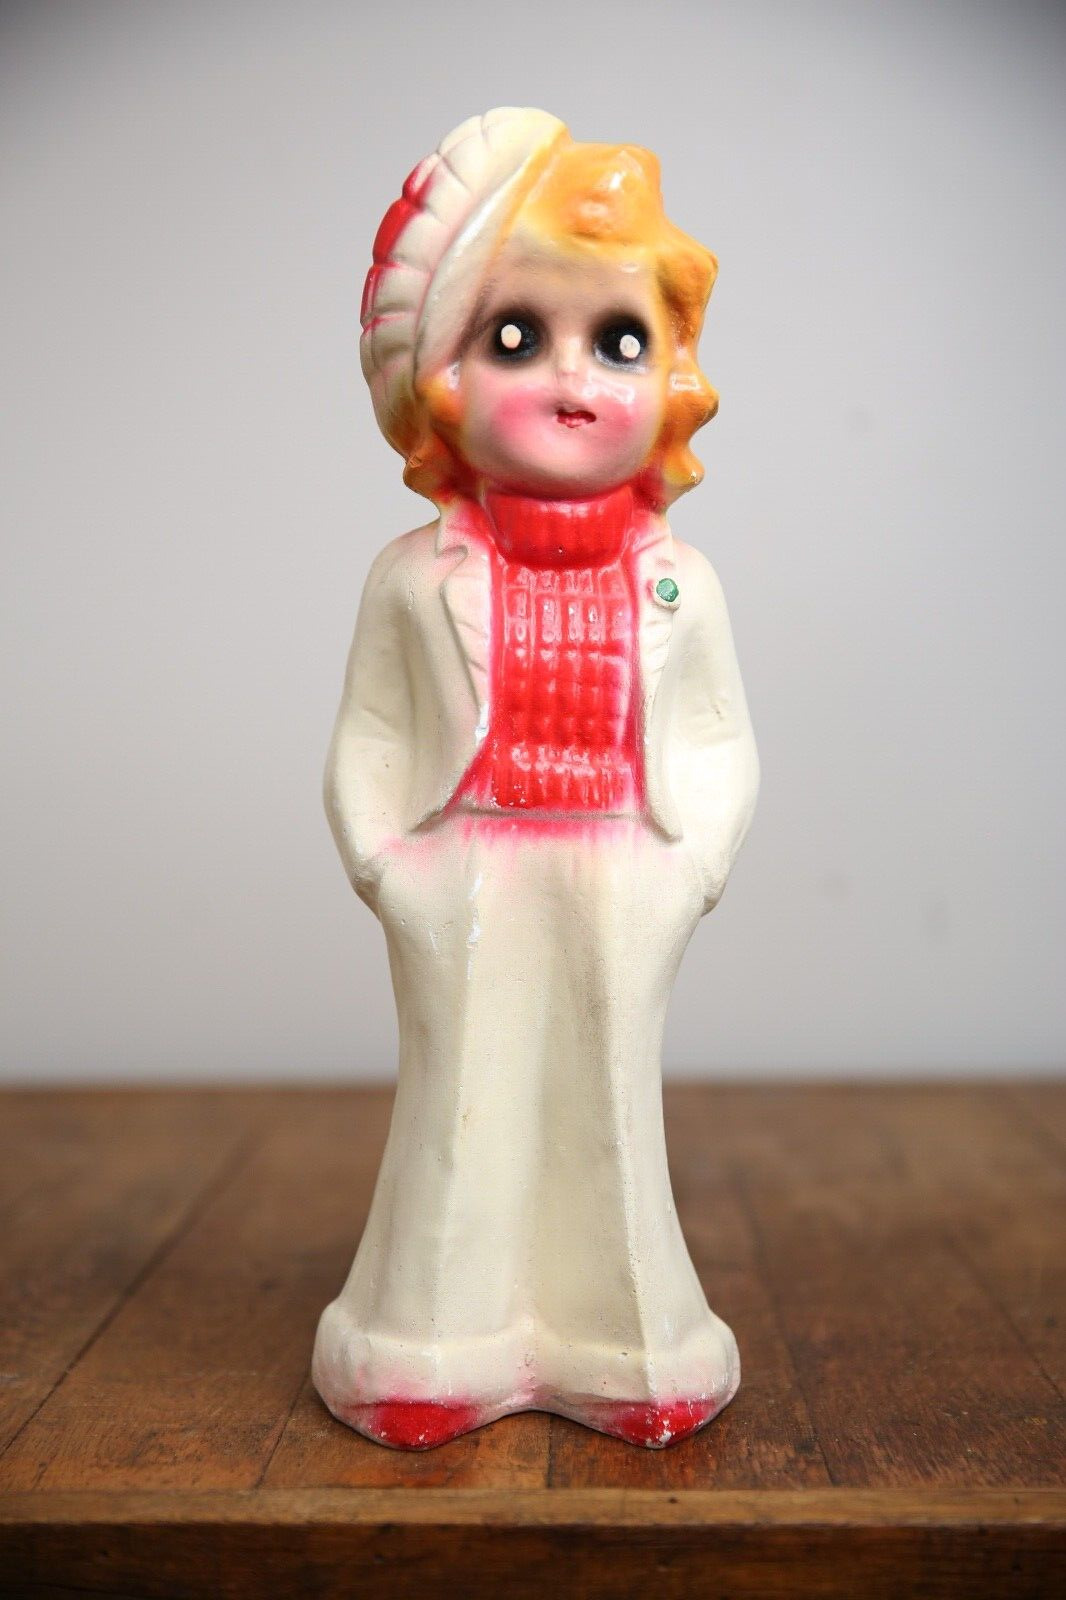 Vintage Chalkware Girl Carnival Prize figure hat jacket bellbottoms creepy scary